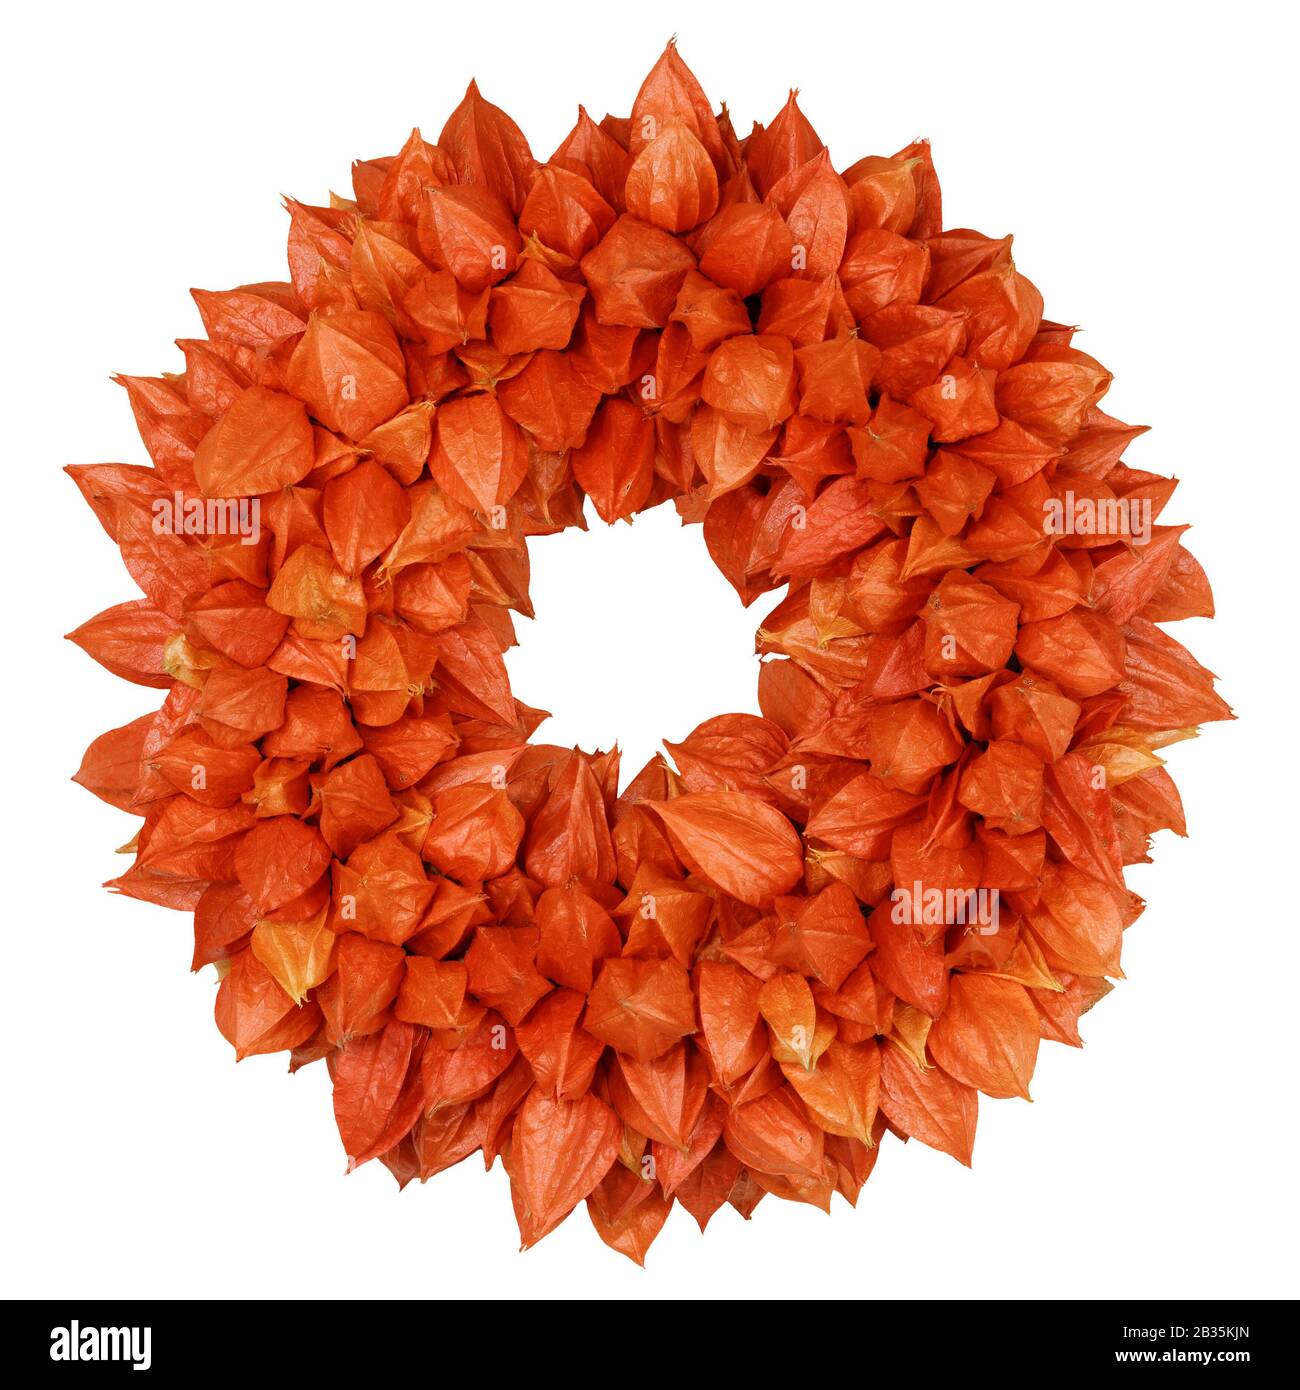 Autumnal Wreath with Physalis (Physalis alkekengi) on white Stock Photo